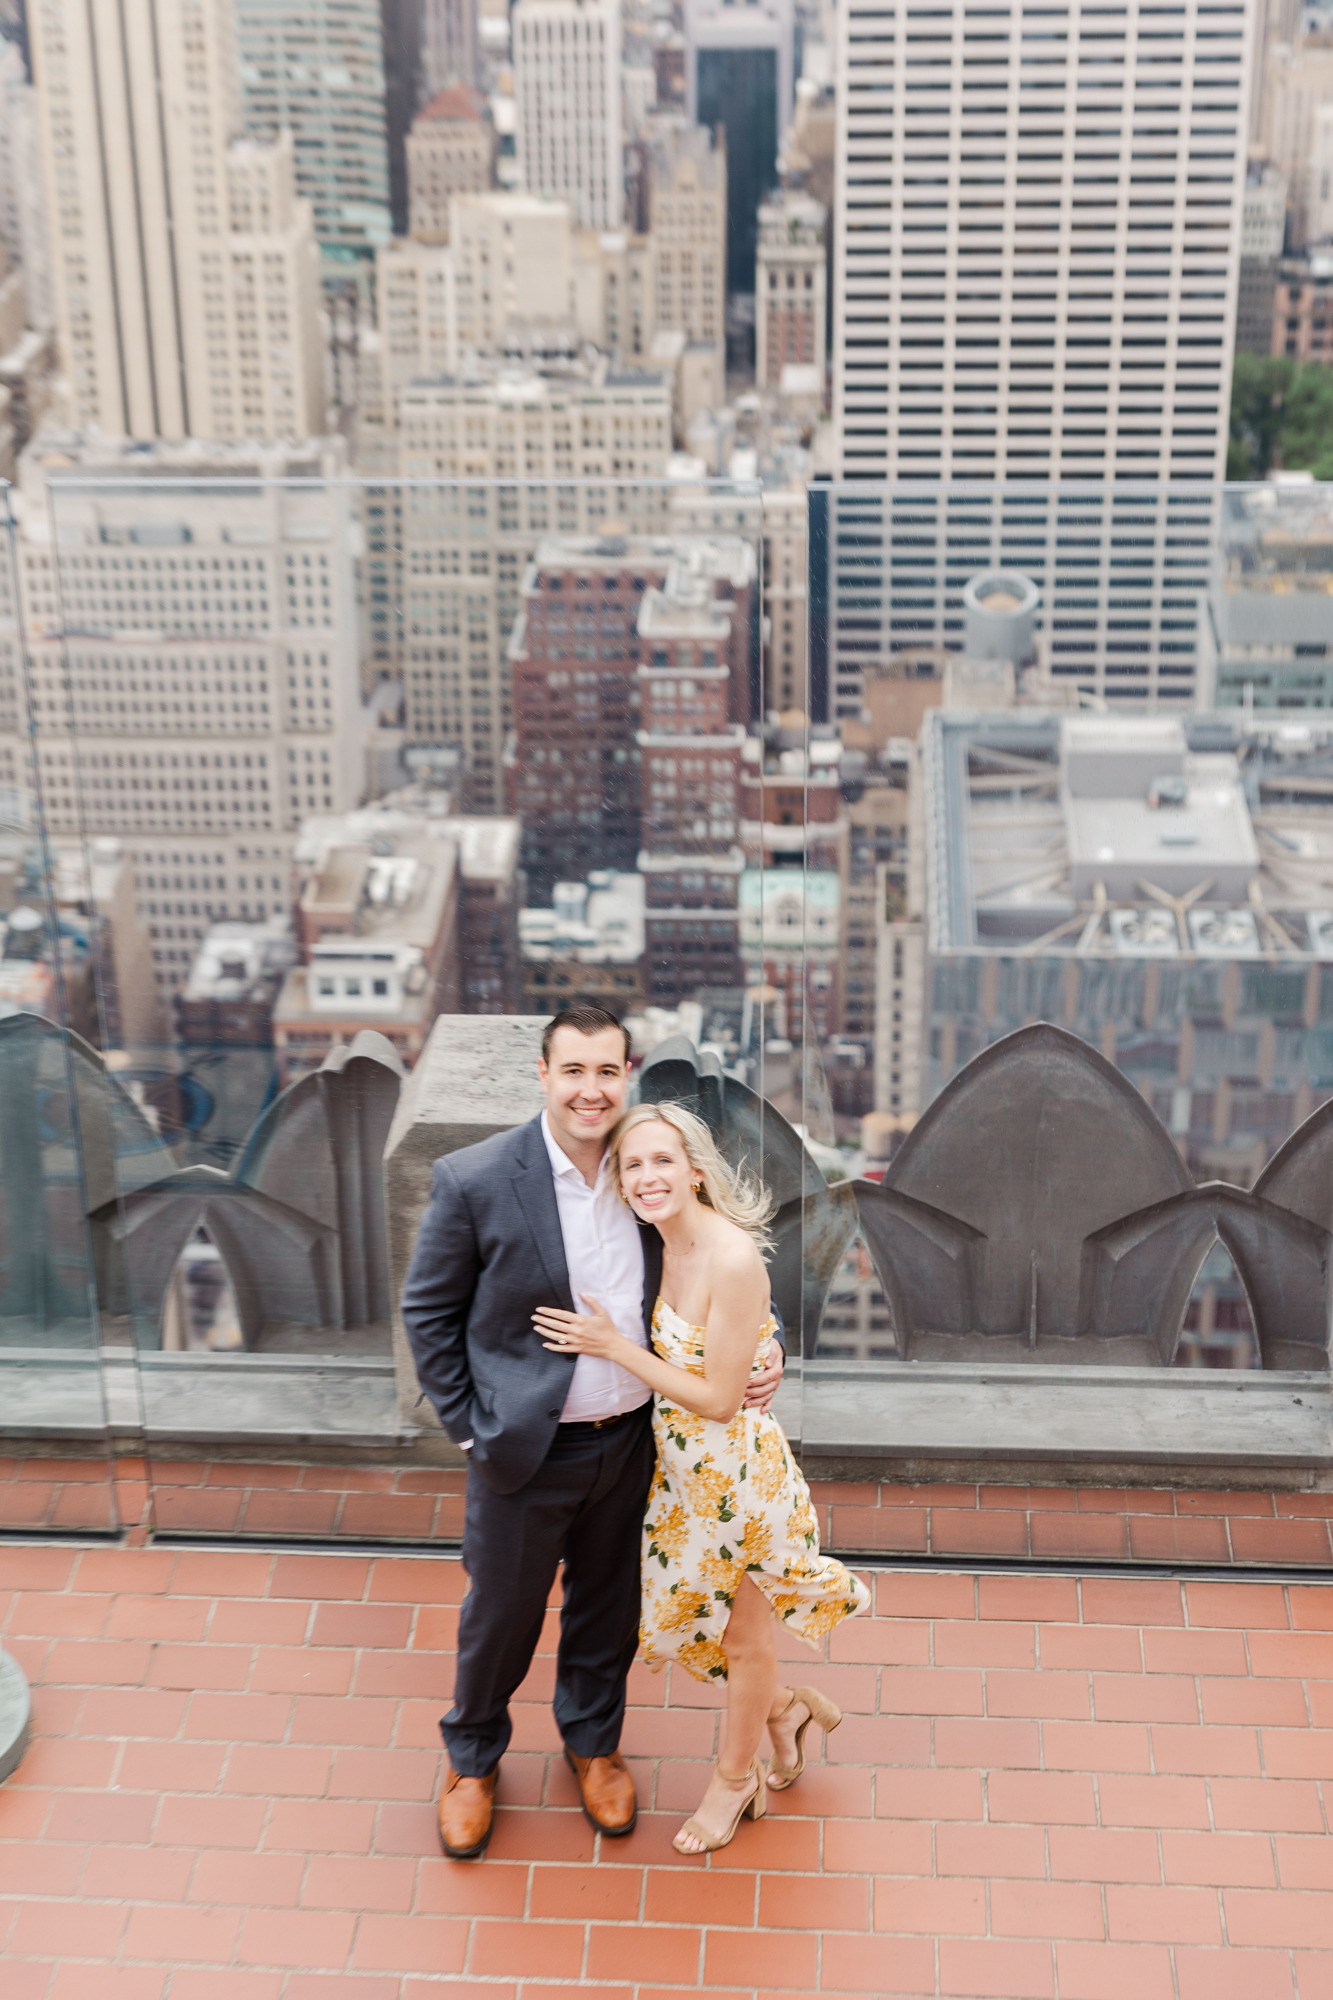 Dazzling New York Engagement Photos